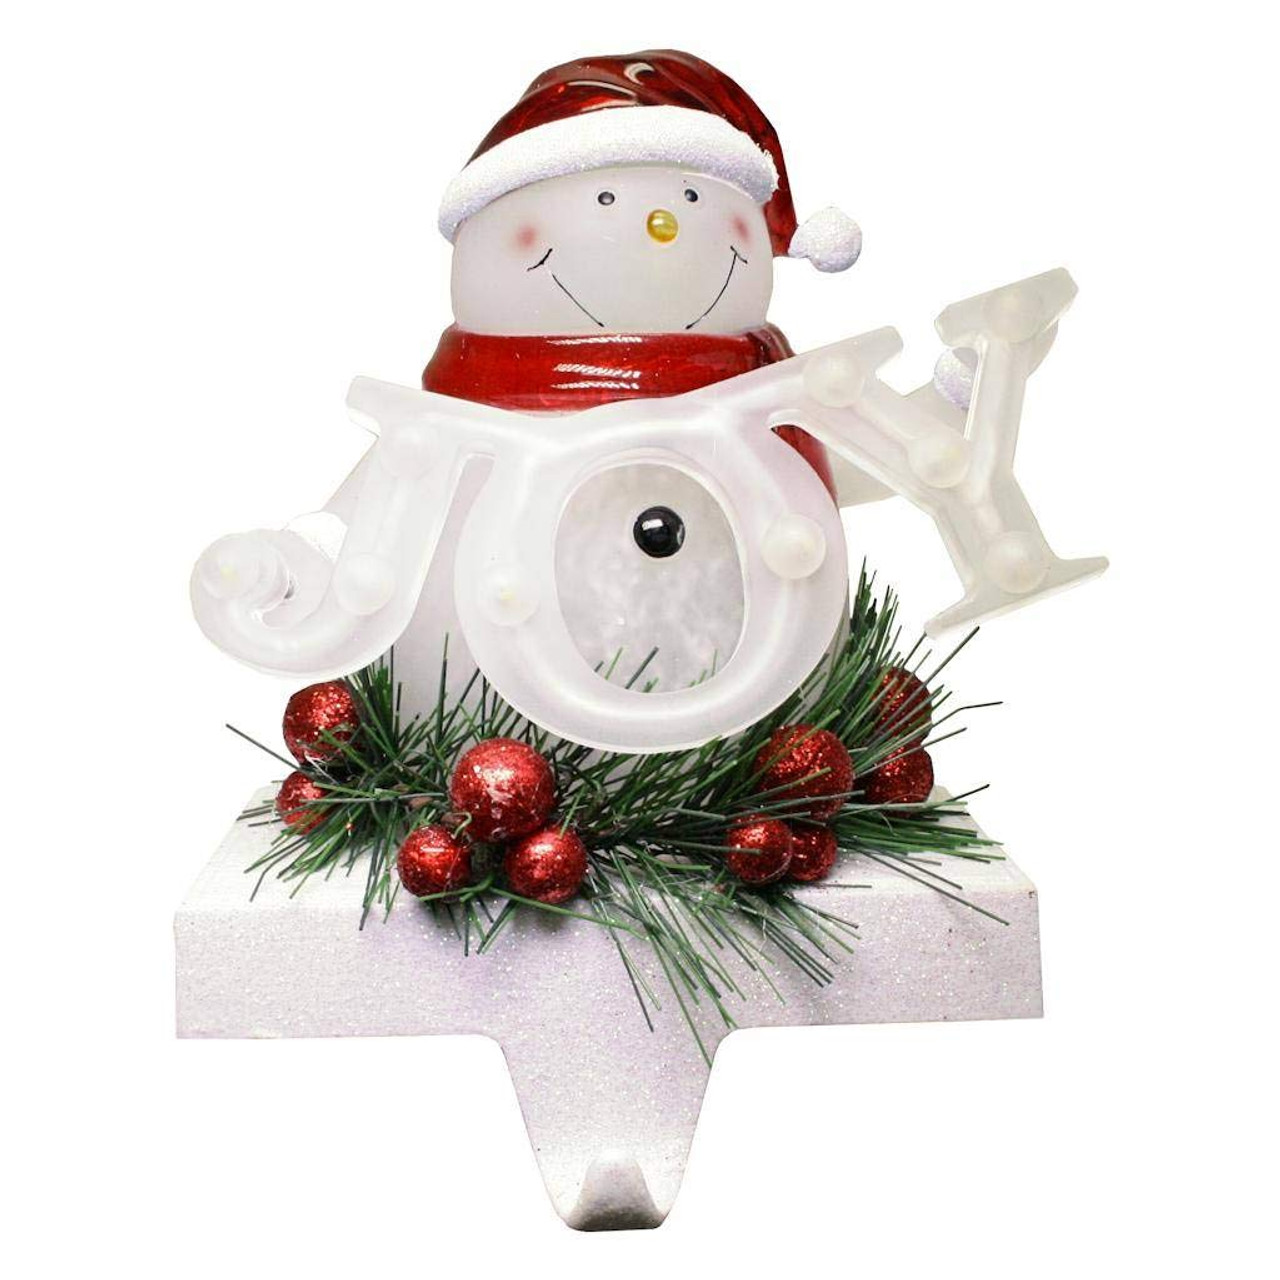 AMO-11FM Cute Field Mouse in Snow Fridge Magnet Stocking Filler Christmas Gift 